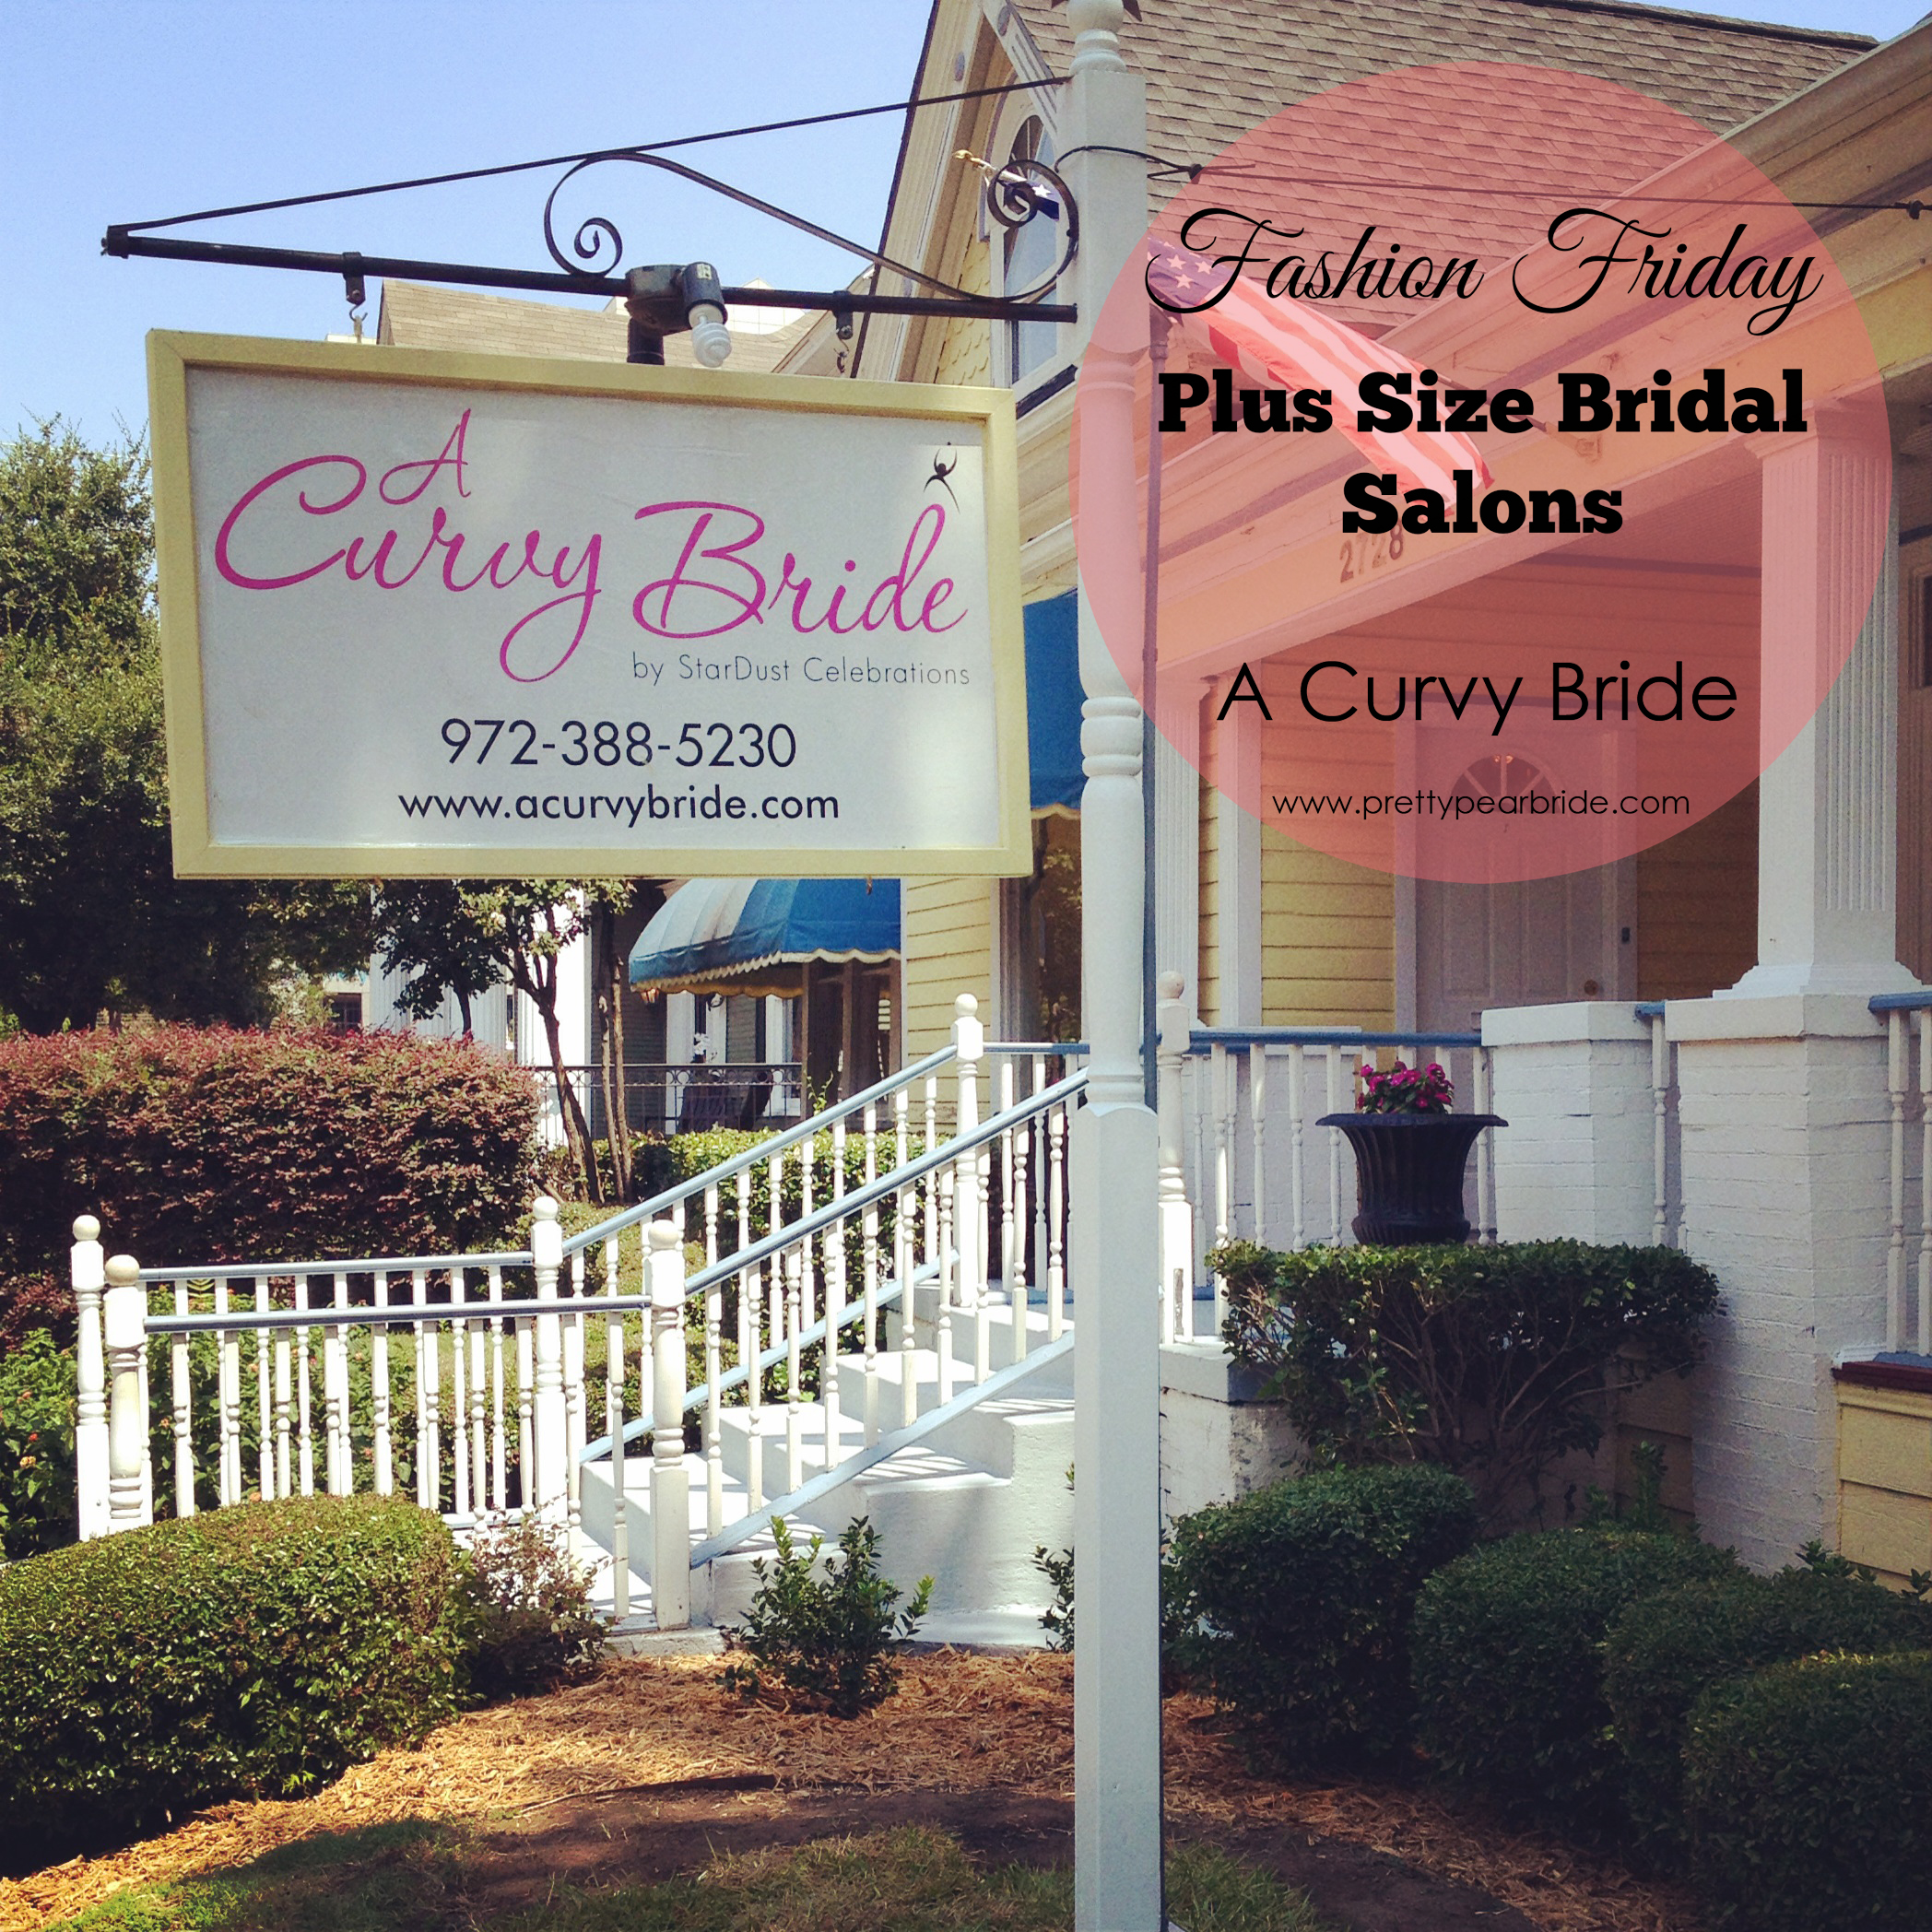 {Plus Size Bridal Salon} “A Curvy Bride” in Texas